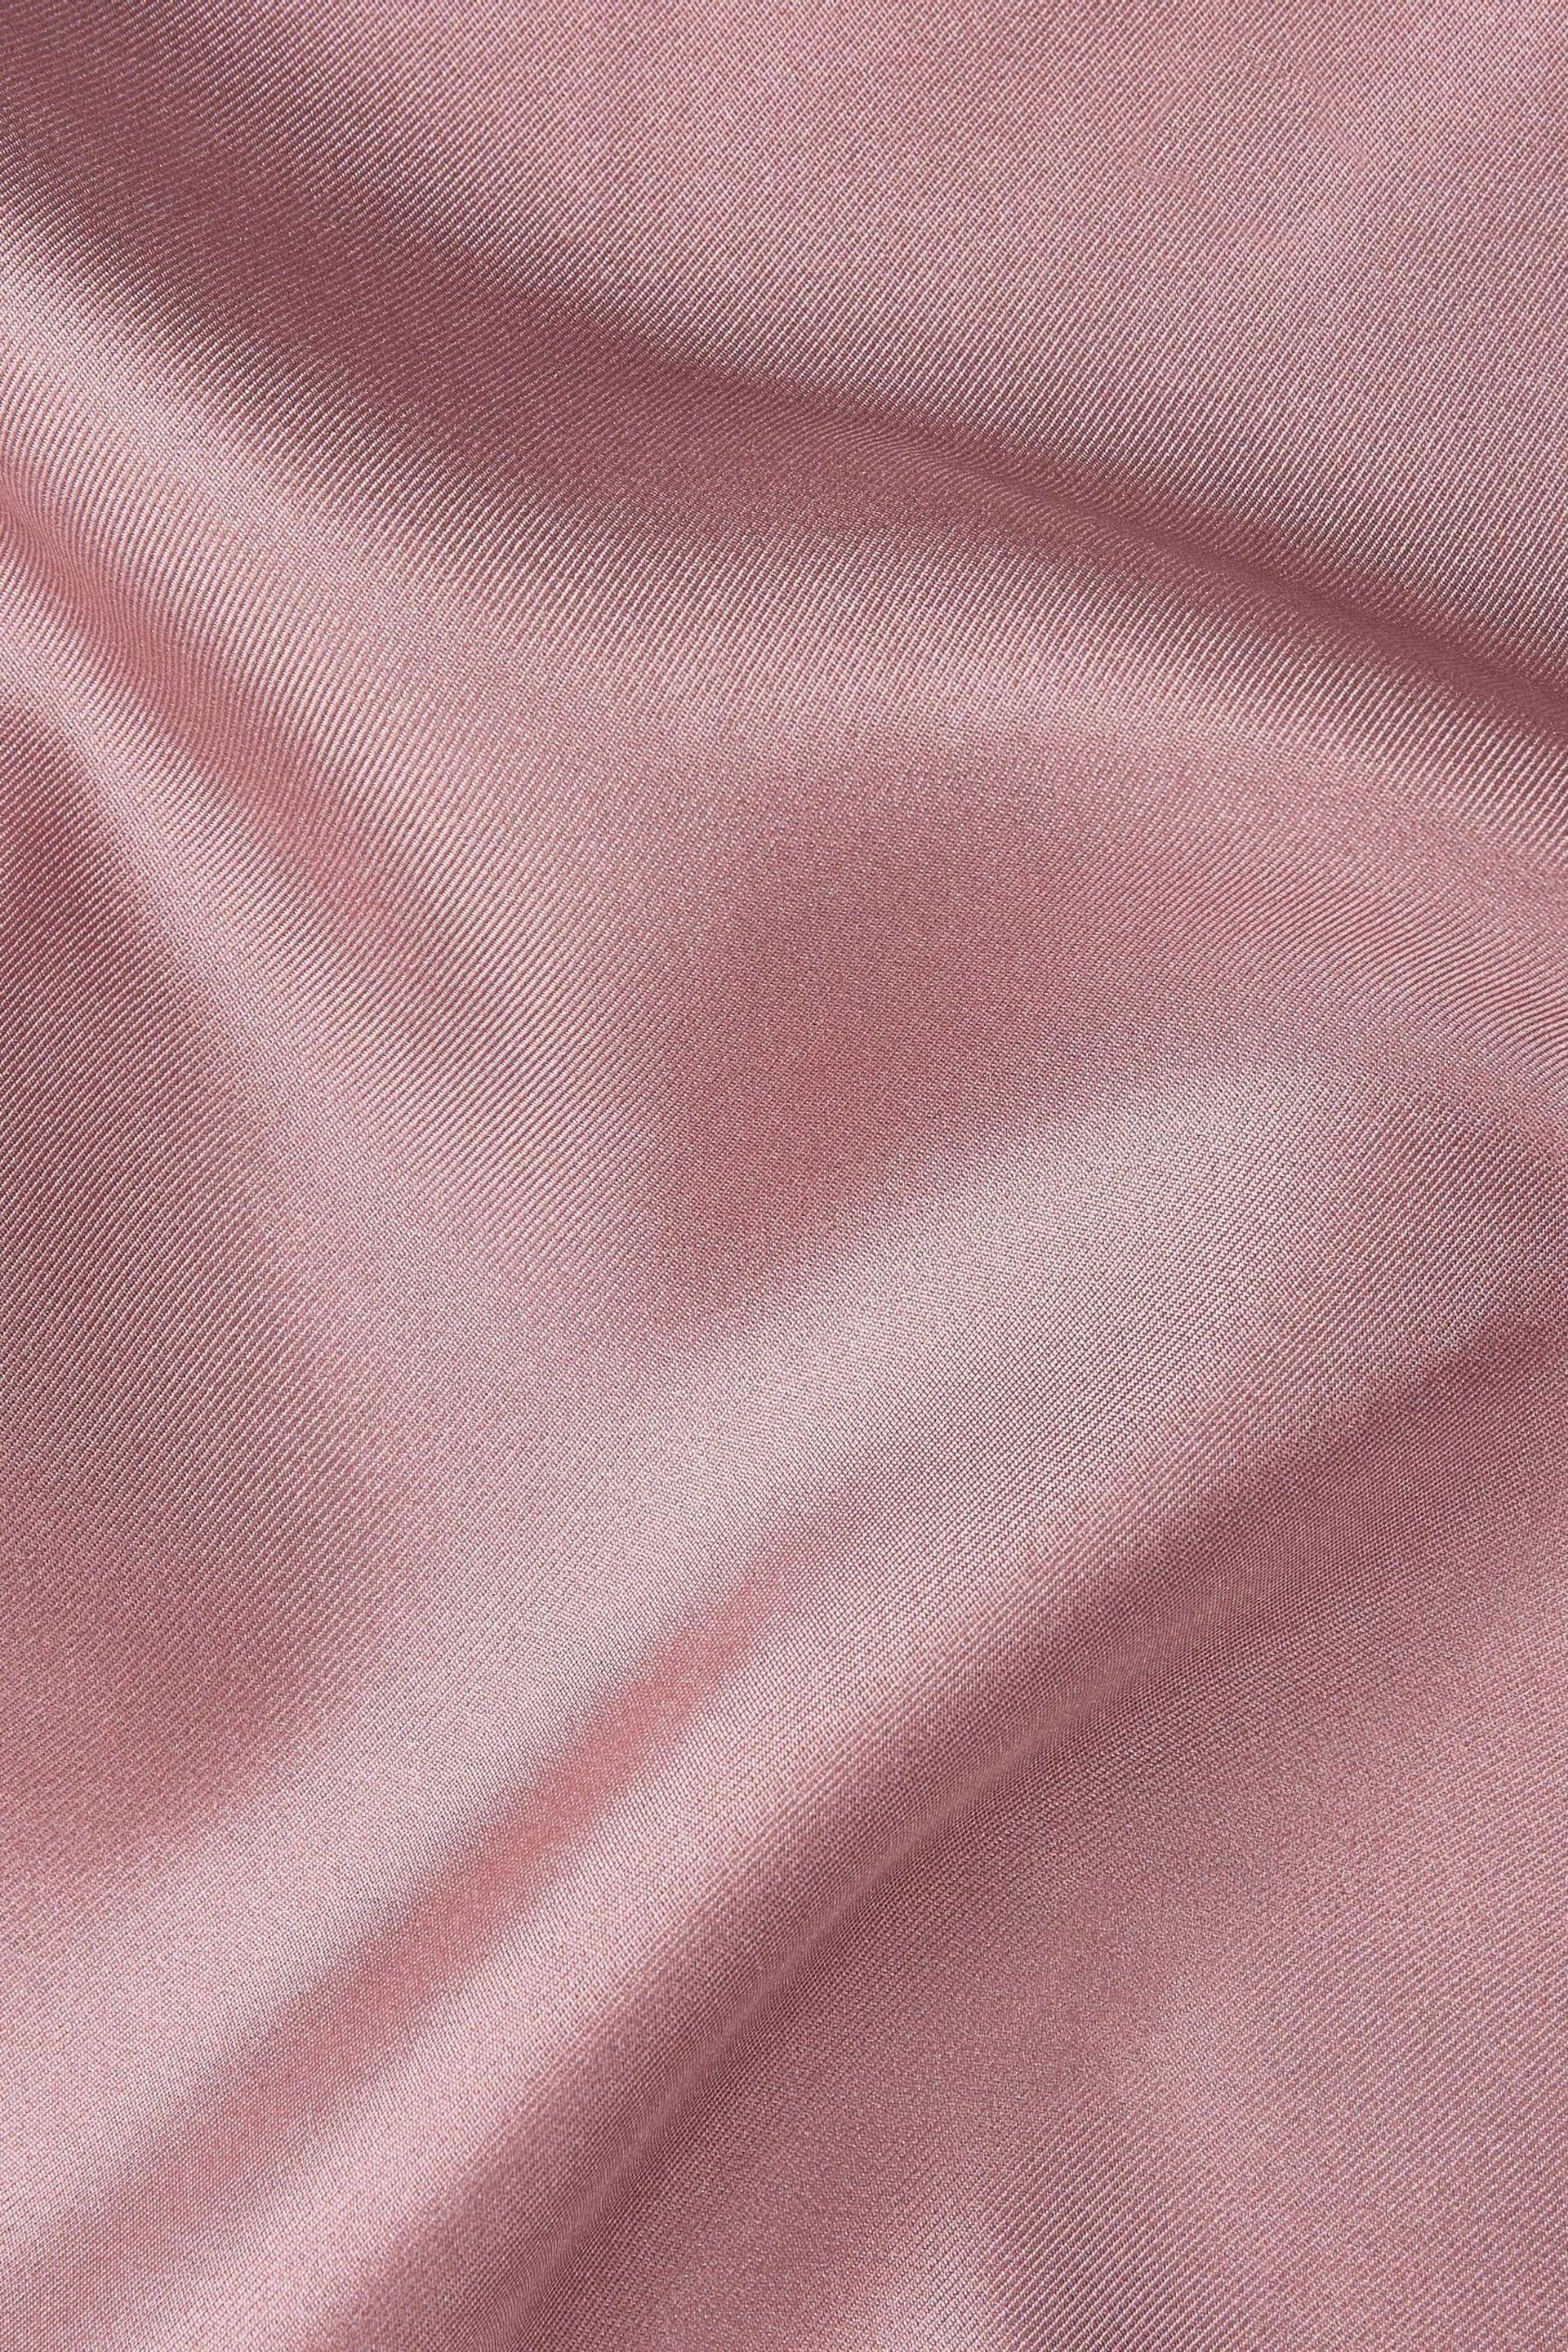 Reiss Pink Ceremony Plain Silk Pocket Square - Image 5 of 5